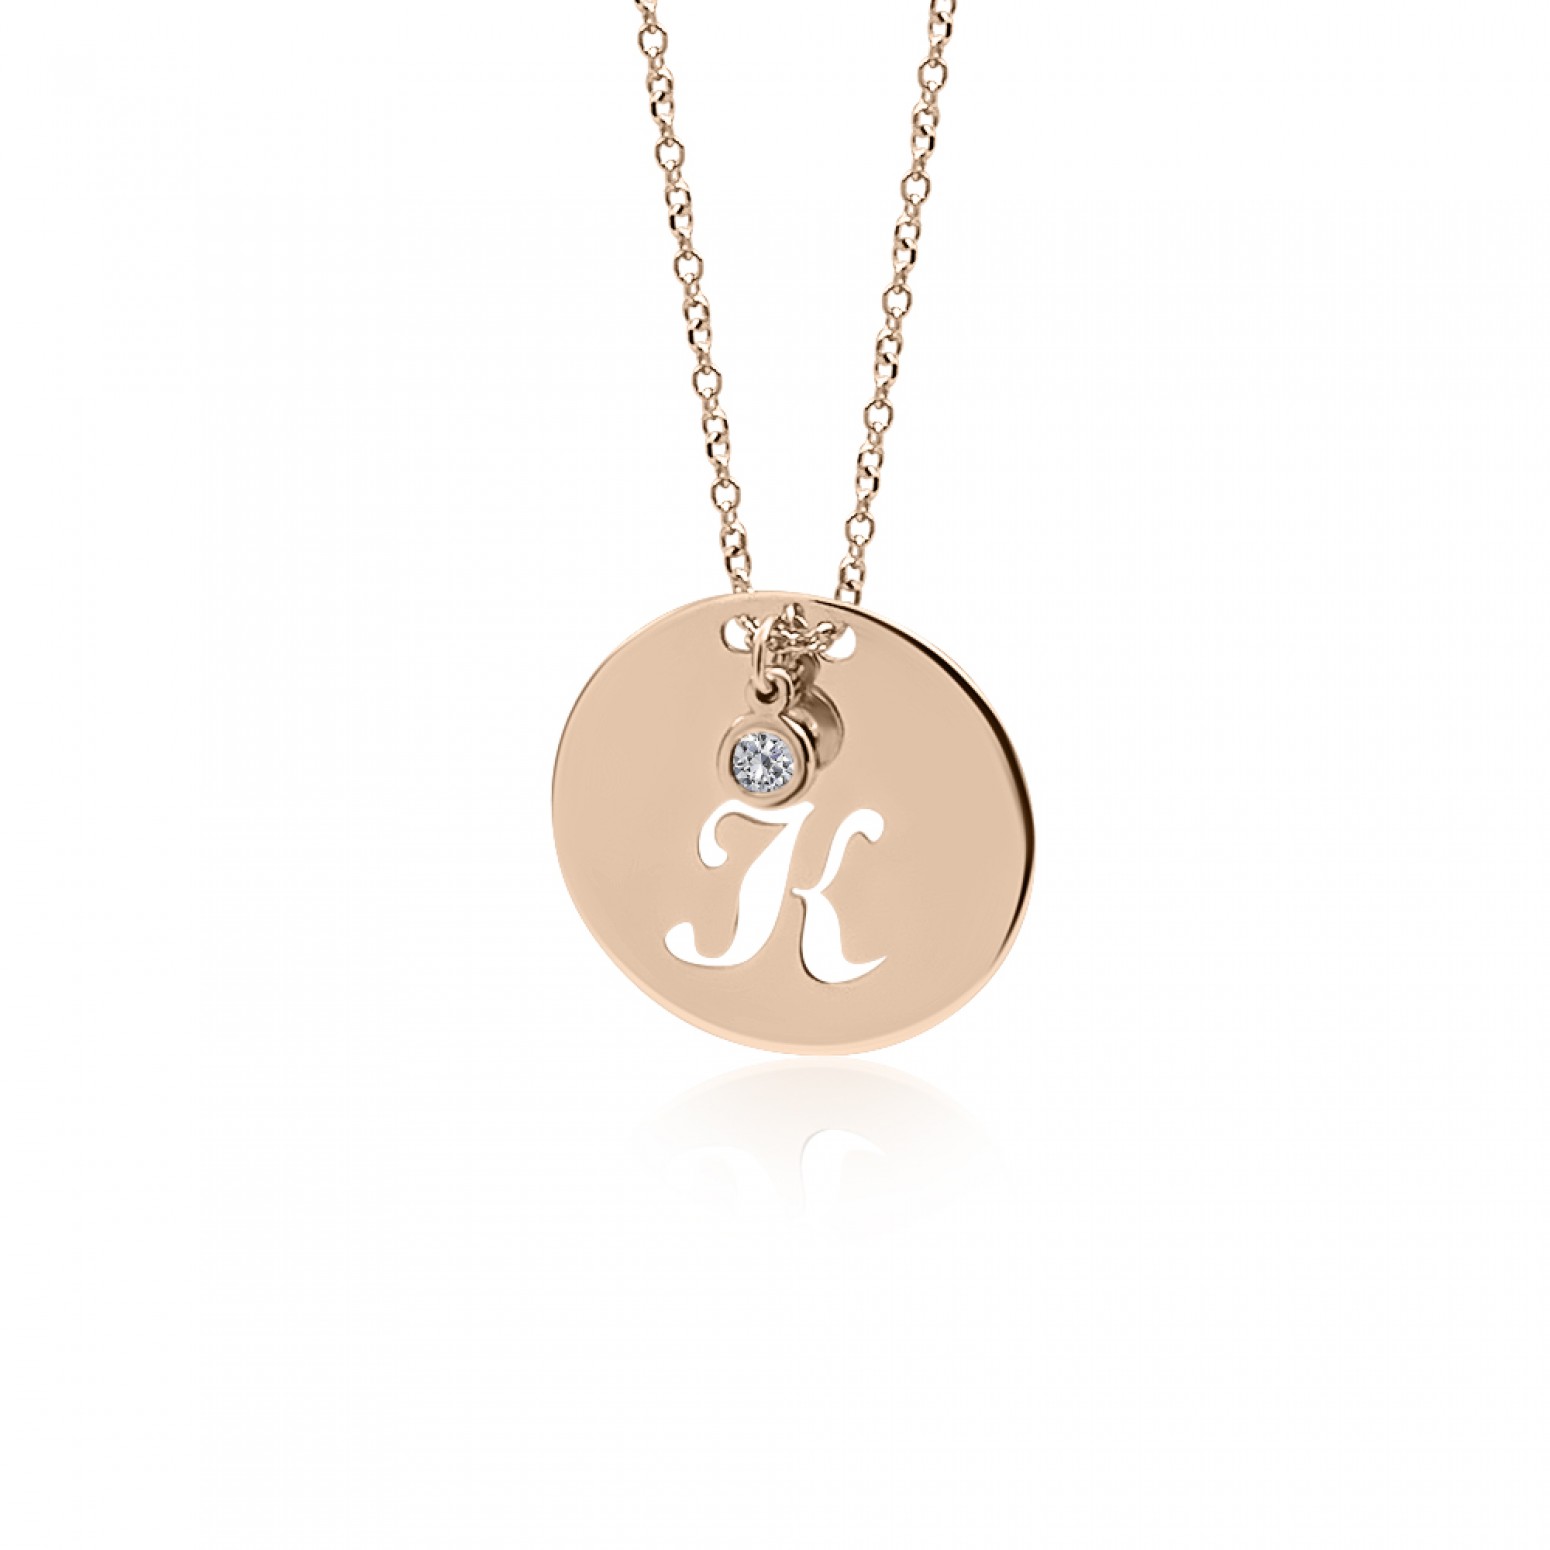 Monogram necklace Κ in round disk , Κ14 pink gold with diamond 0.02ct, VS2, H ko4632 NECKLACES Κοσμηματα - chrilia.gr